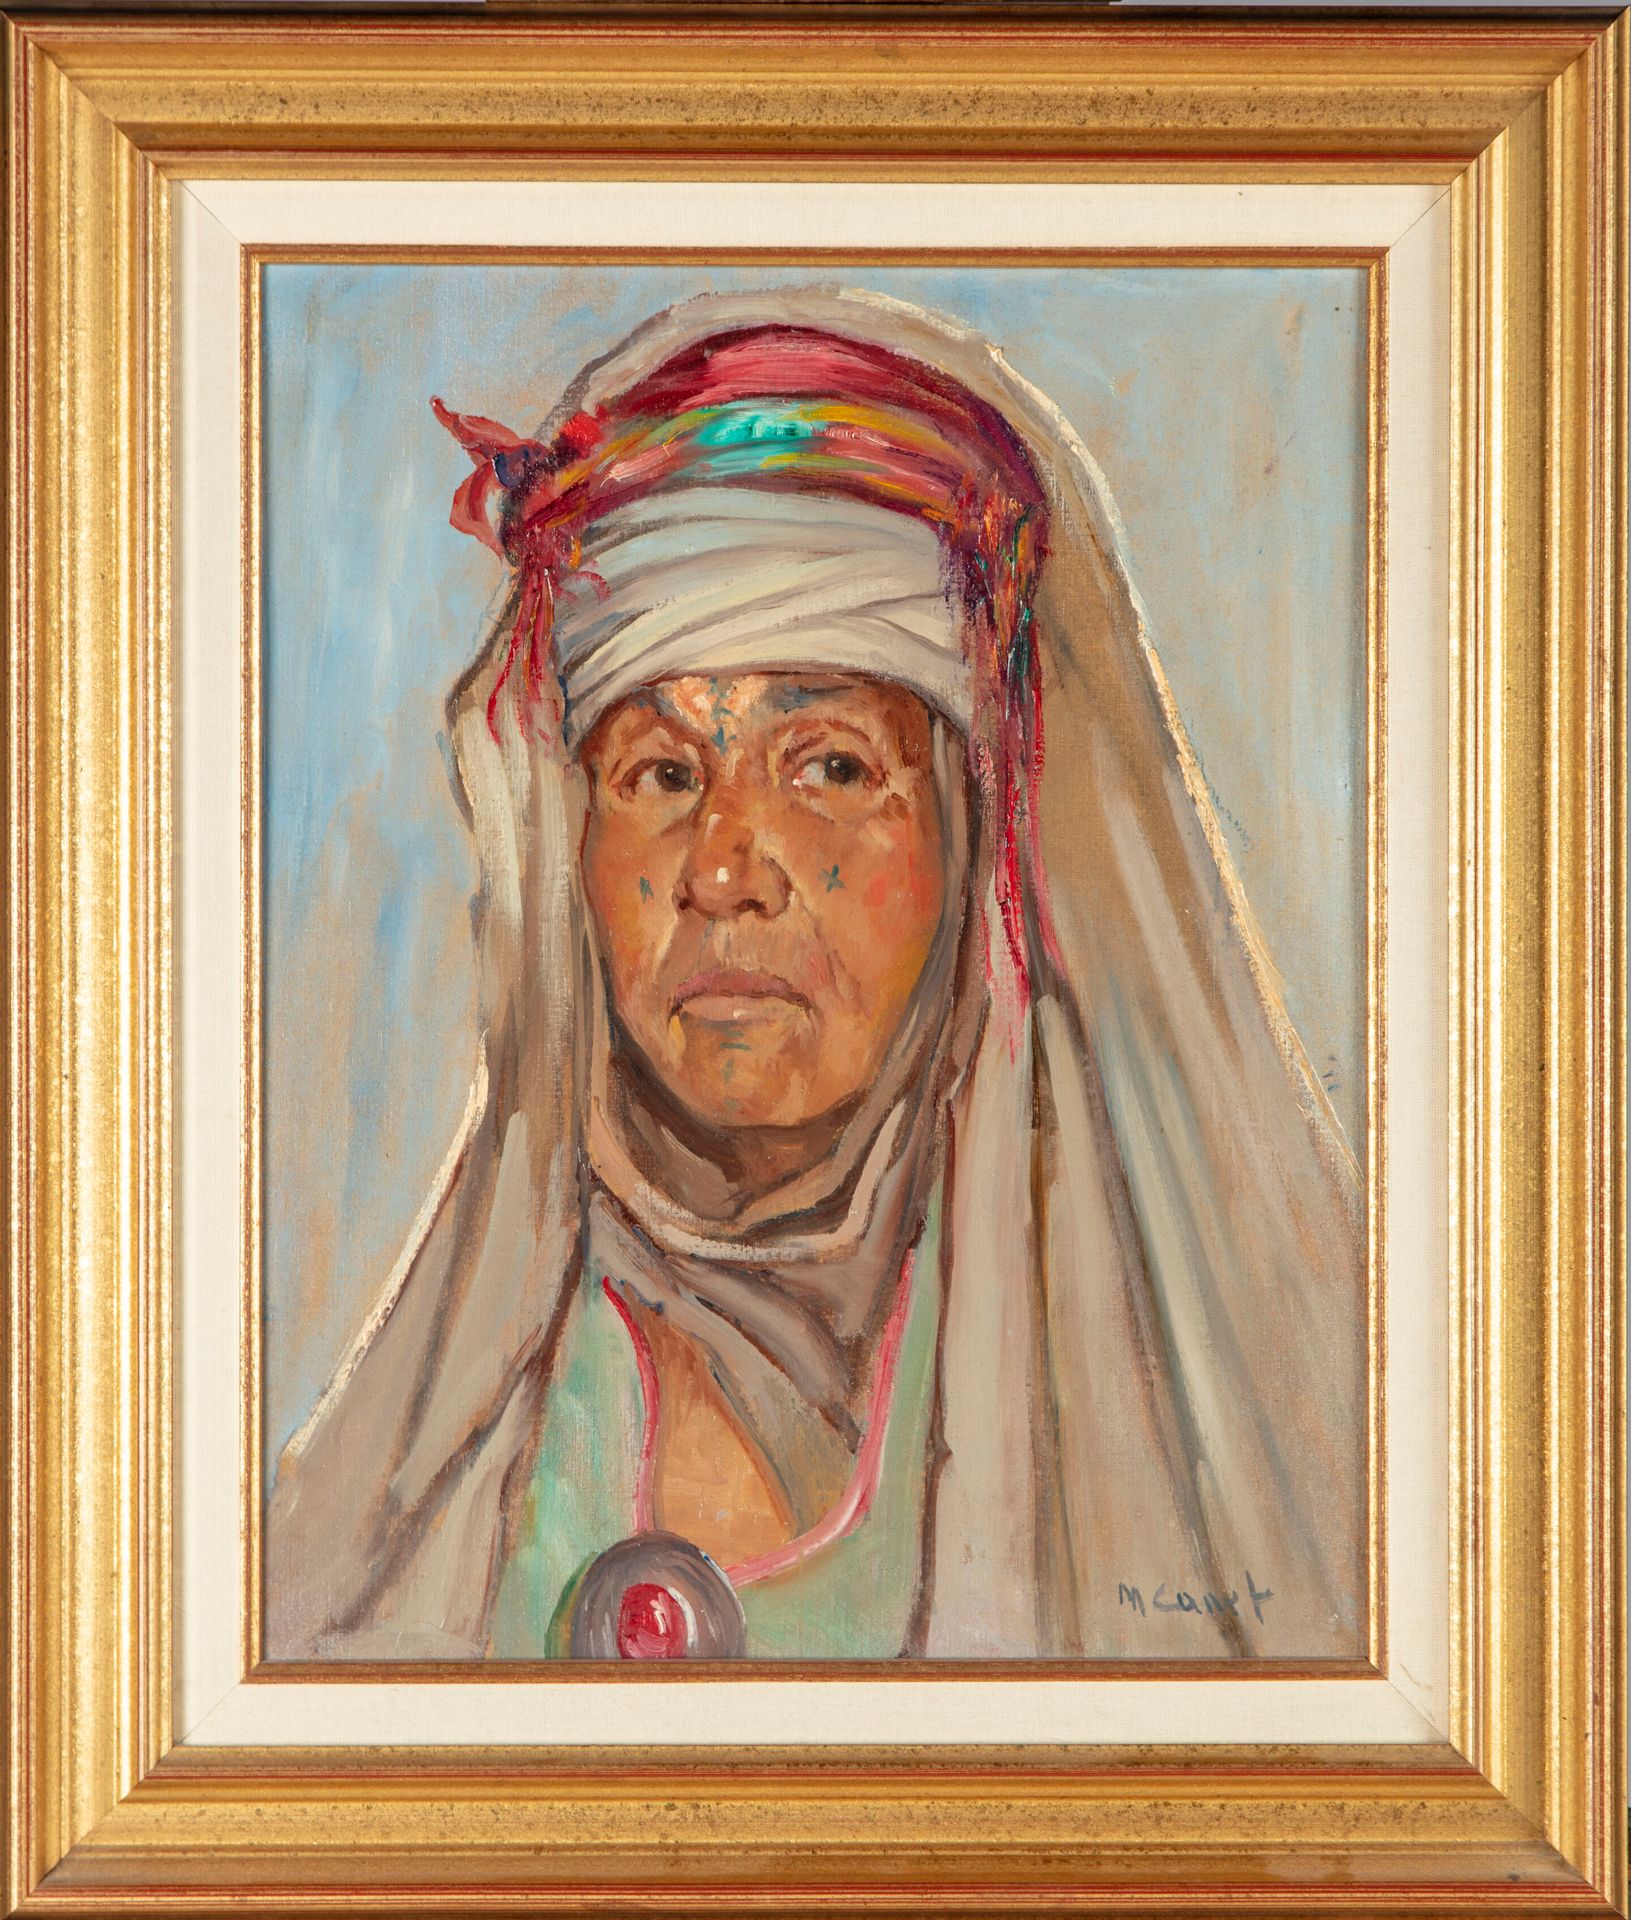 MARCEL CANET 马塞尔-卡内(Marcel CANET) (1875-1959)

一个柏柏尔女人的画像

裱在画板上的油画，右下方有签名

39,5&hellip;